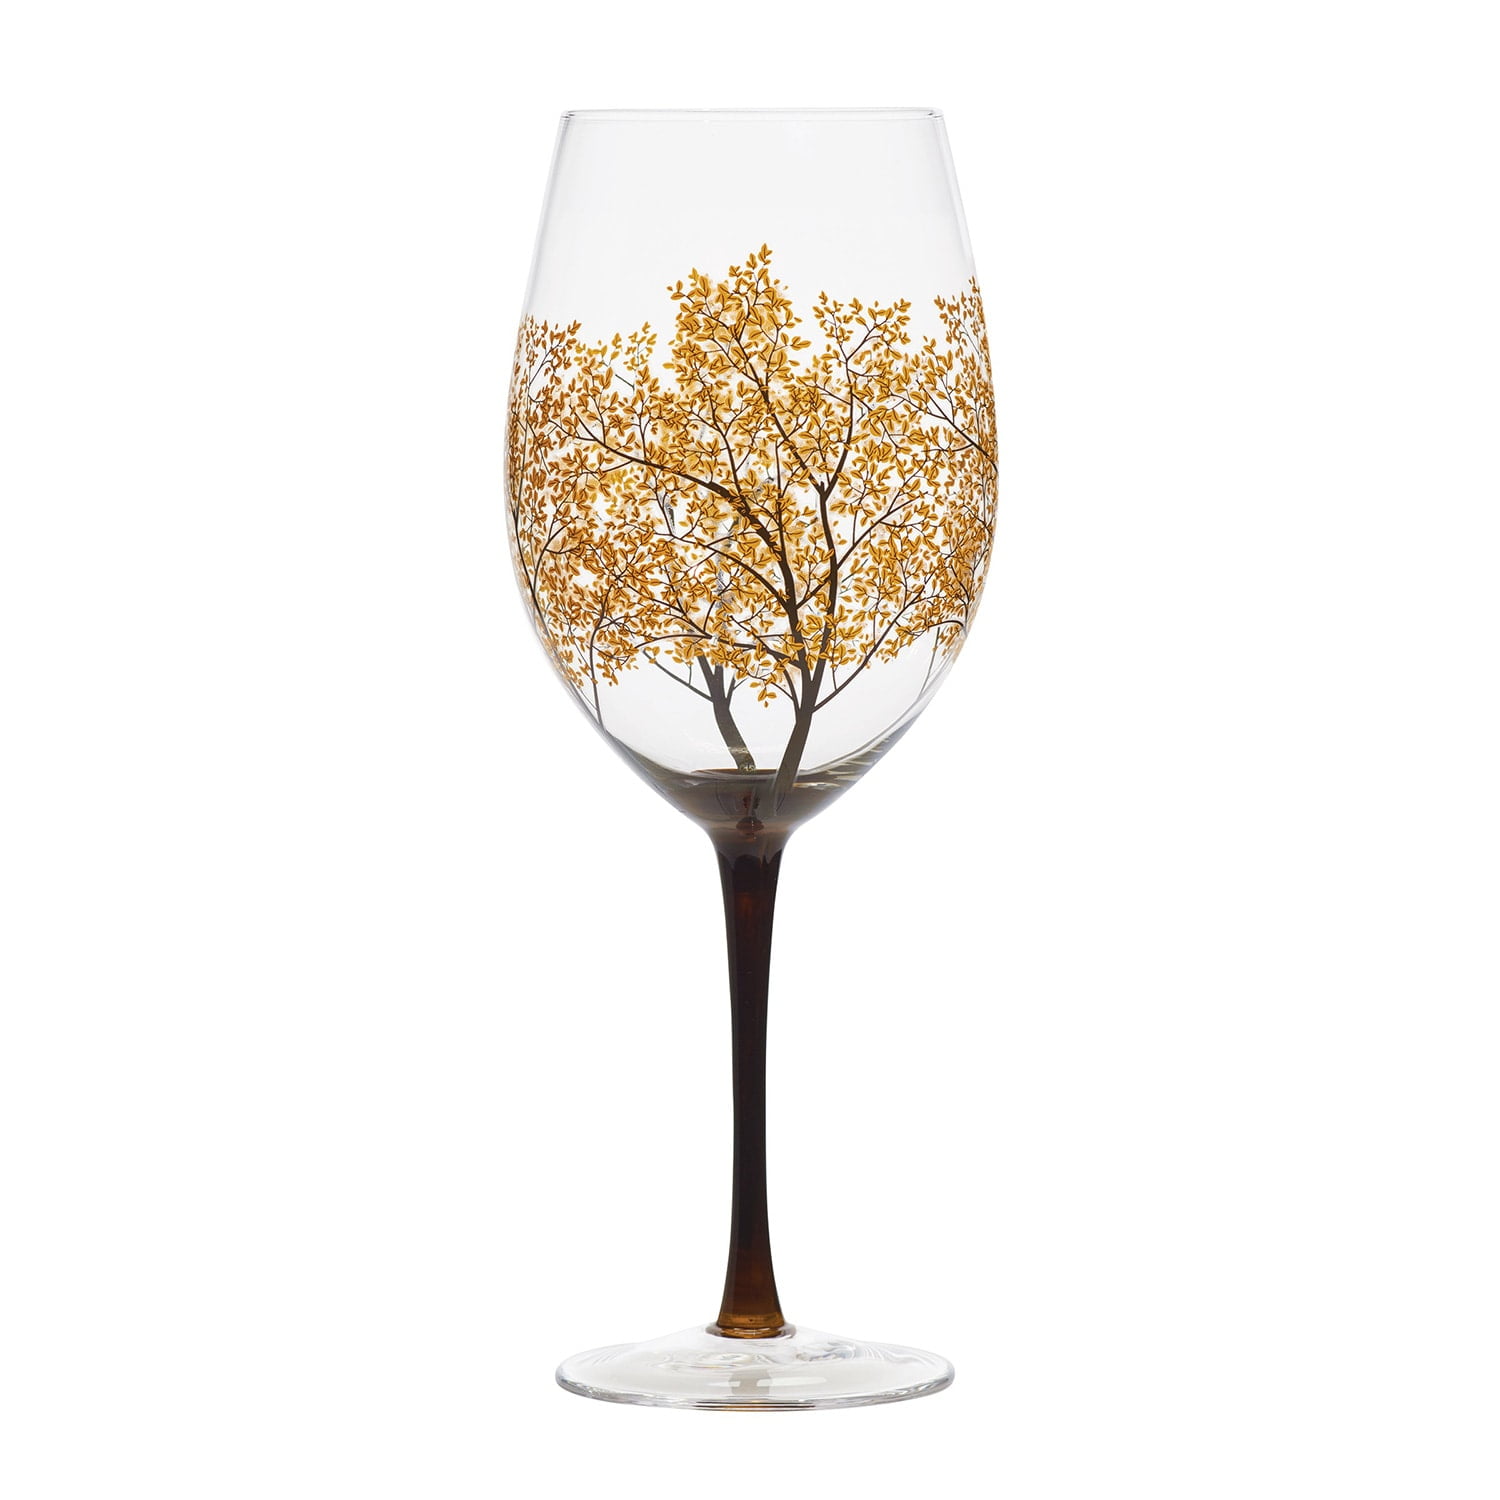 OSQI Classic Palm Tree Acrylic Wine Glasses Set of 4 (16oz), Premium  Quality Unbreakable Bamboo Stemmed Acrylic Wine Glasses for All Purpose Red  or White Wine